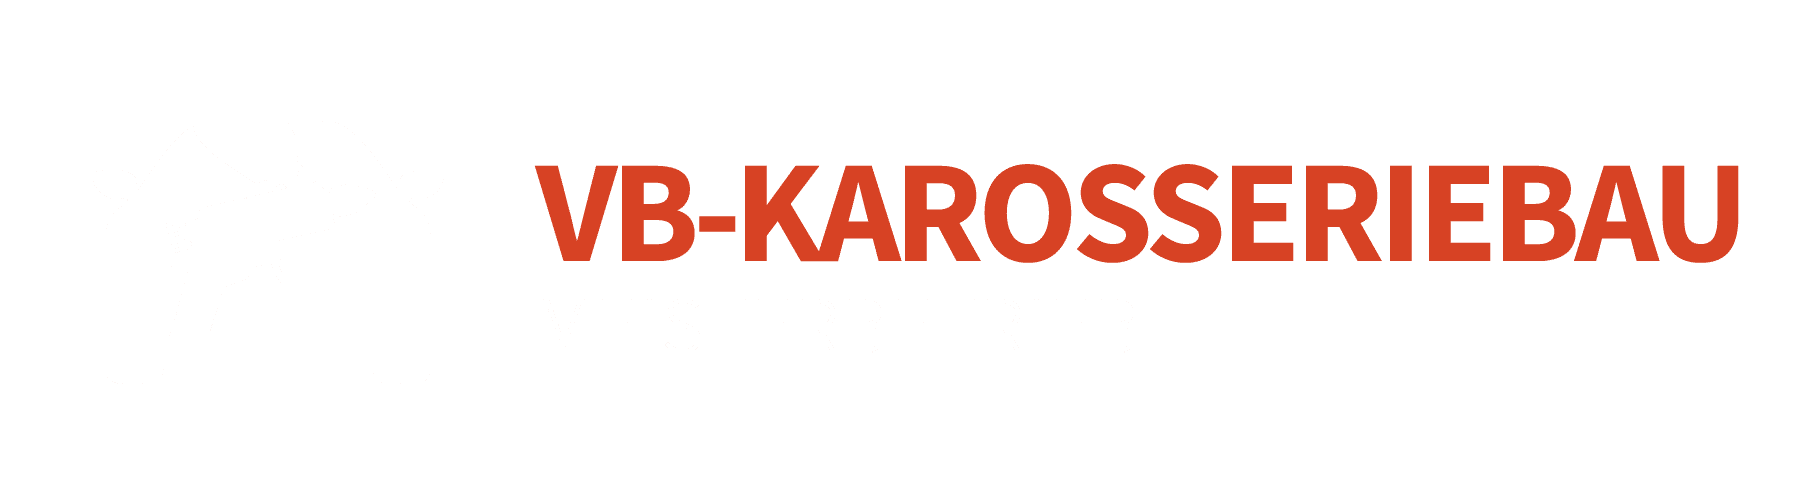 VB-Karosseriebau_Logo_Lackierzenturm